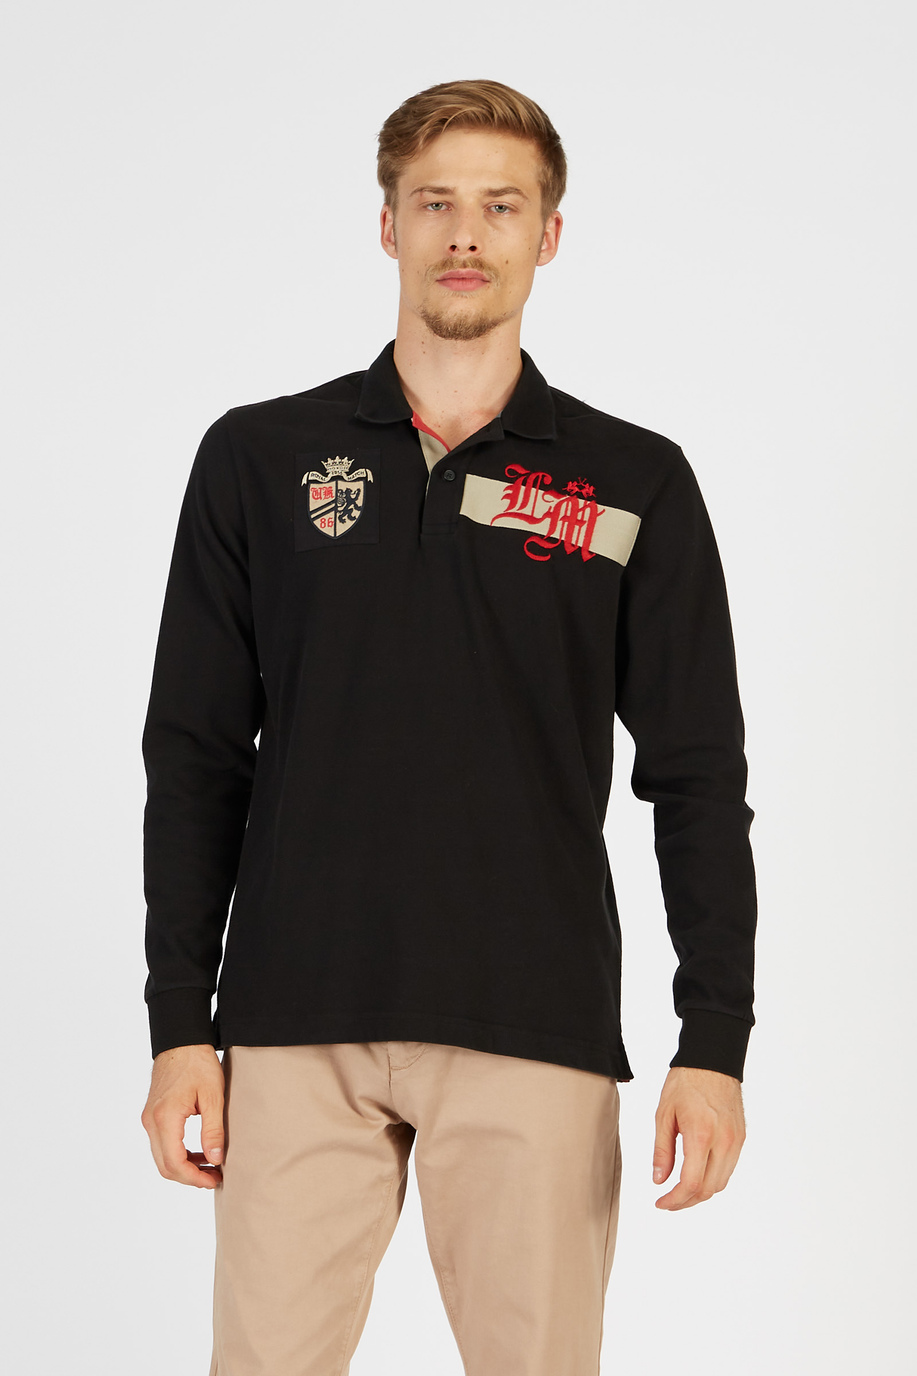 Herren-Poloshirt mit langen Ärmeln aus Jersey-Baumwolle - Poloshirts | La Martina - Official Online Shop